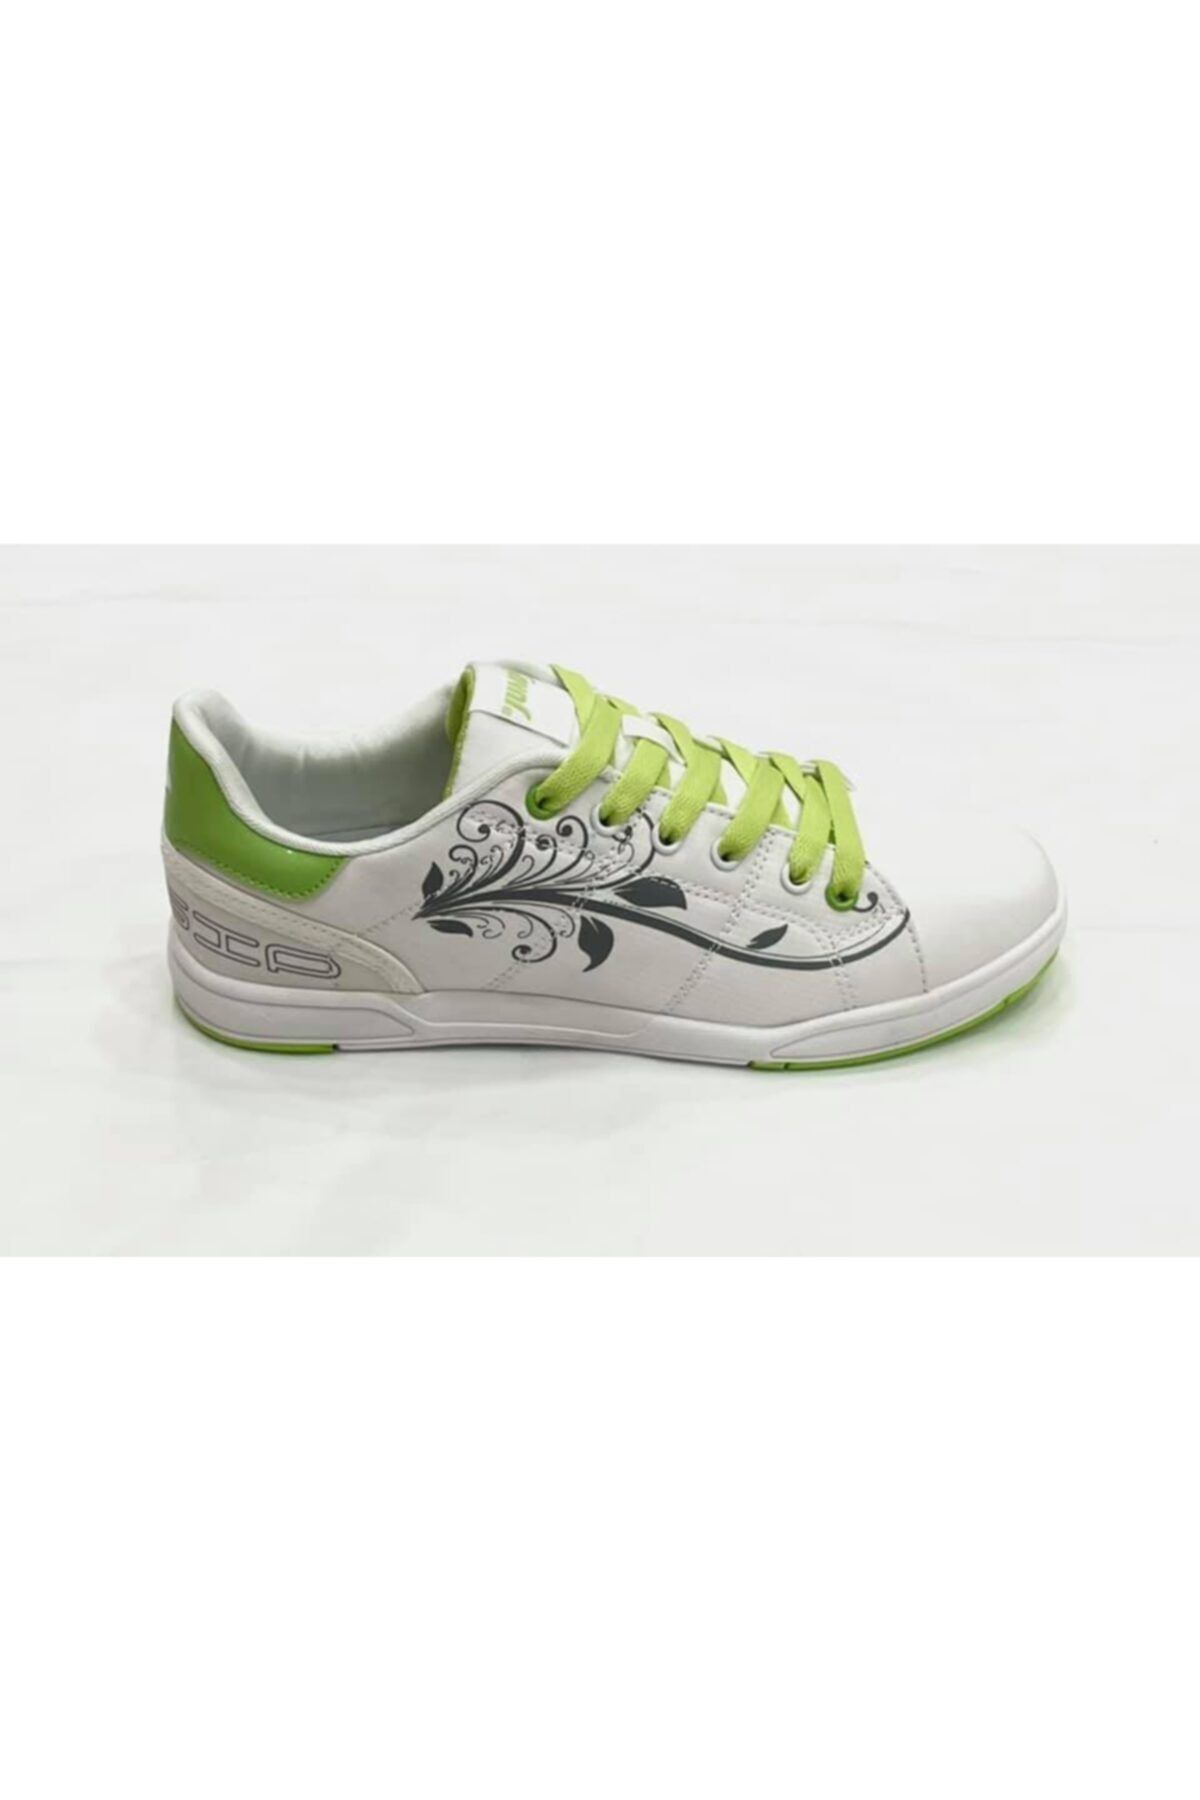 Jump کفش ورزشی یونیسکس سفید سبز